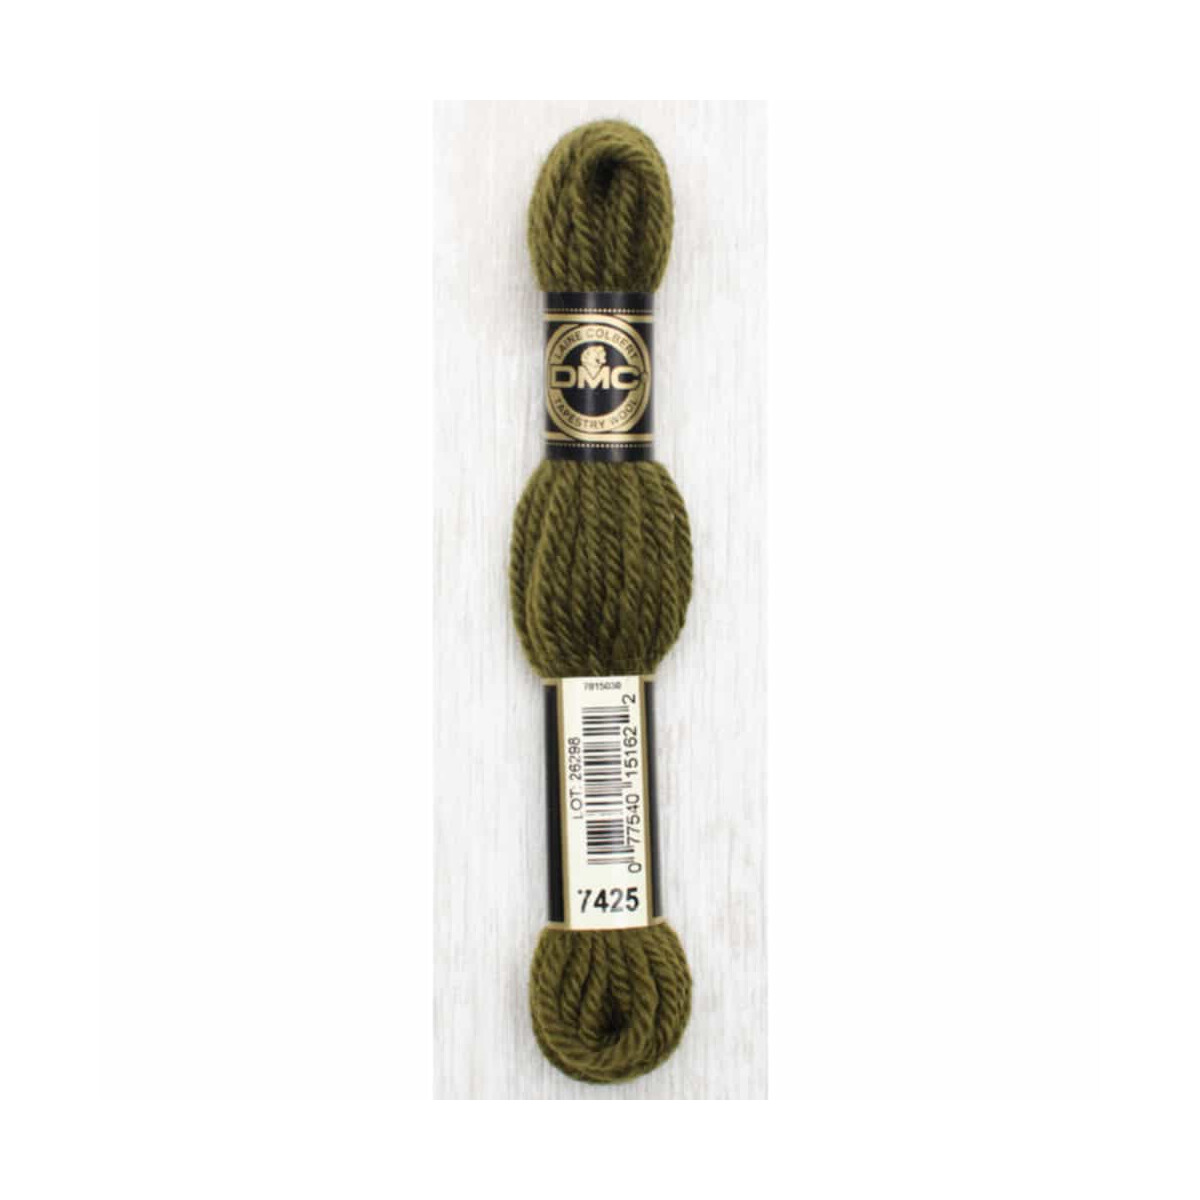 DMC Laine Colbert wool, 8m, 486-7425